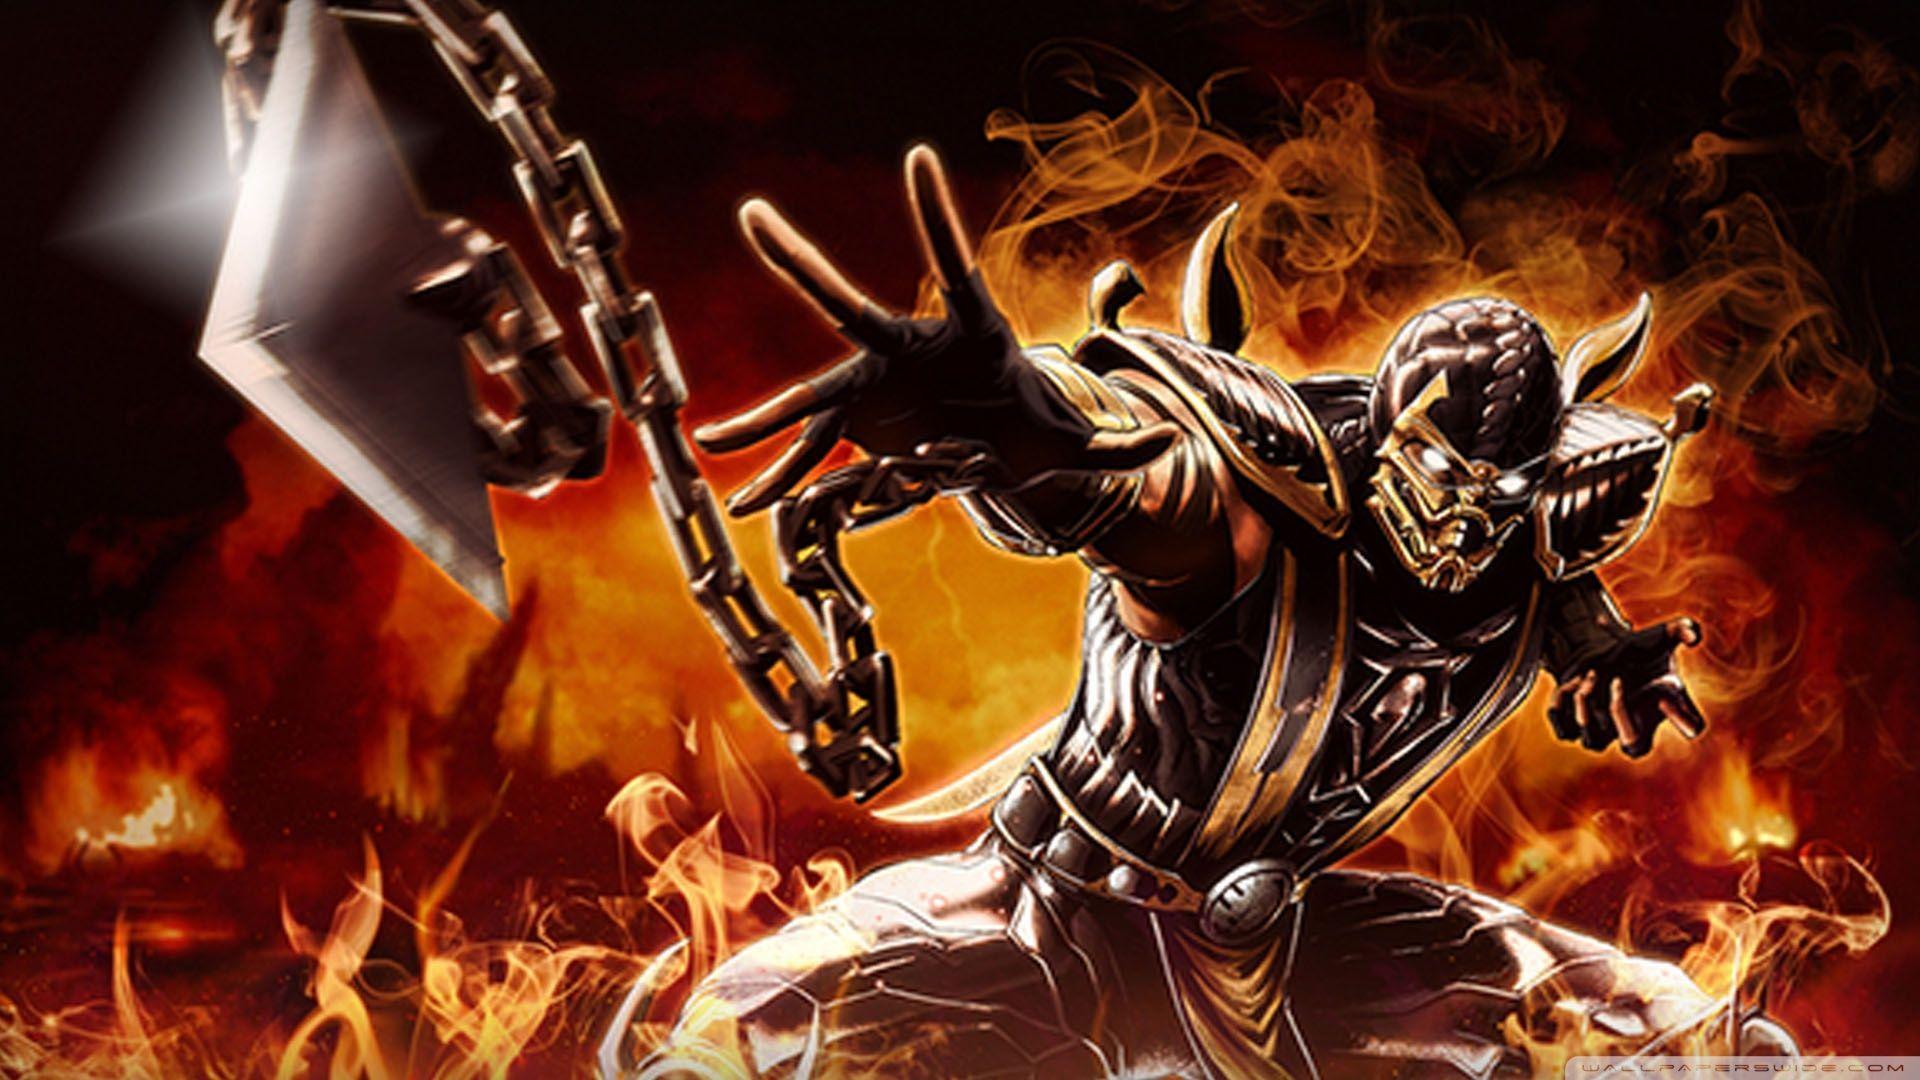 YYK 64: Mortal Kombat Scorpion Wallpaper, Picture Of Mortal Kombat